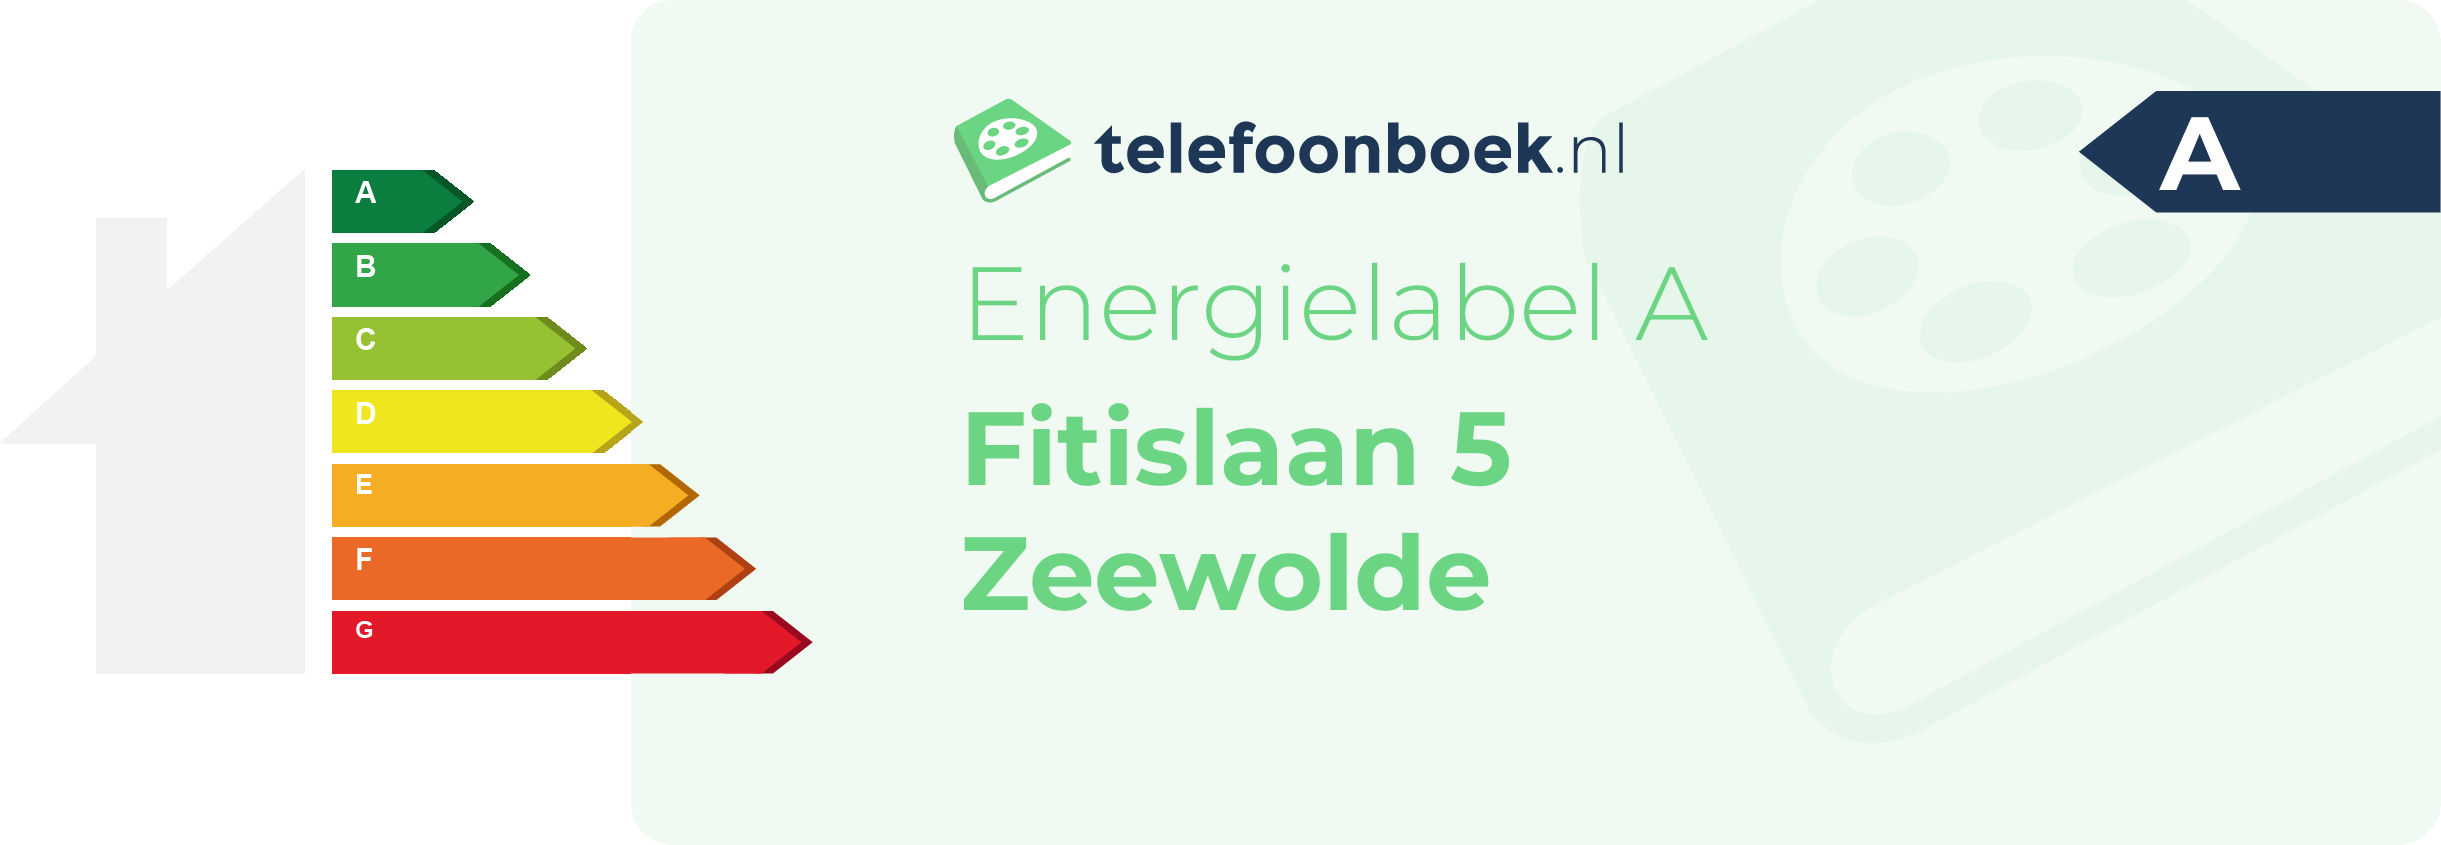 Energielabel Fitislaan 5 Zeewolde